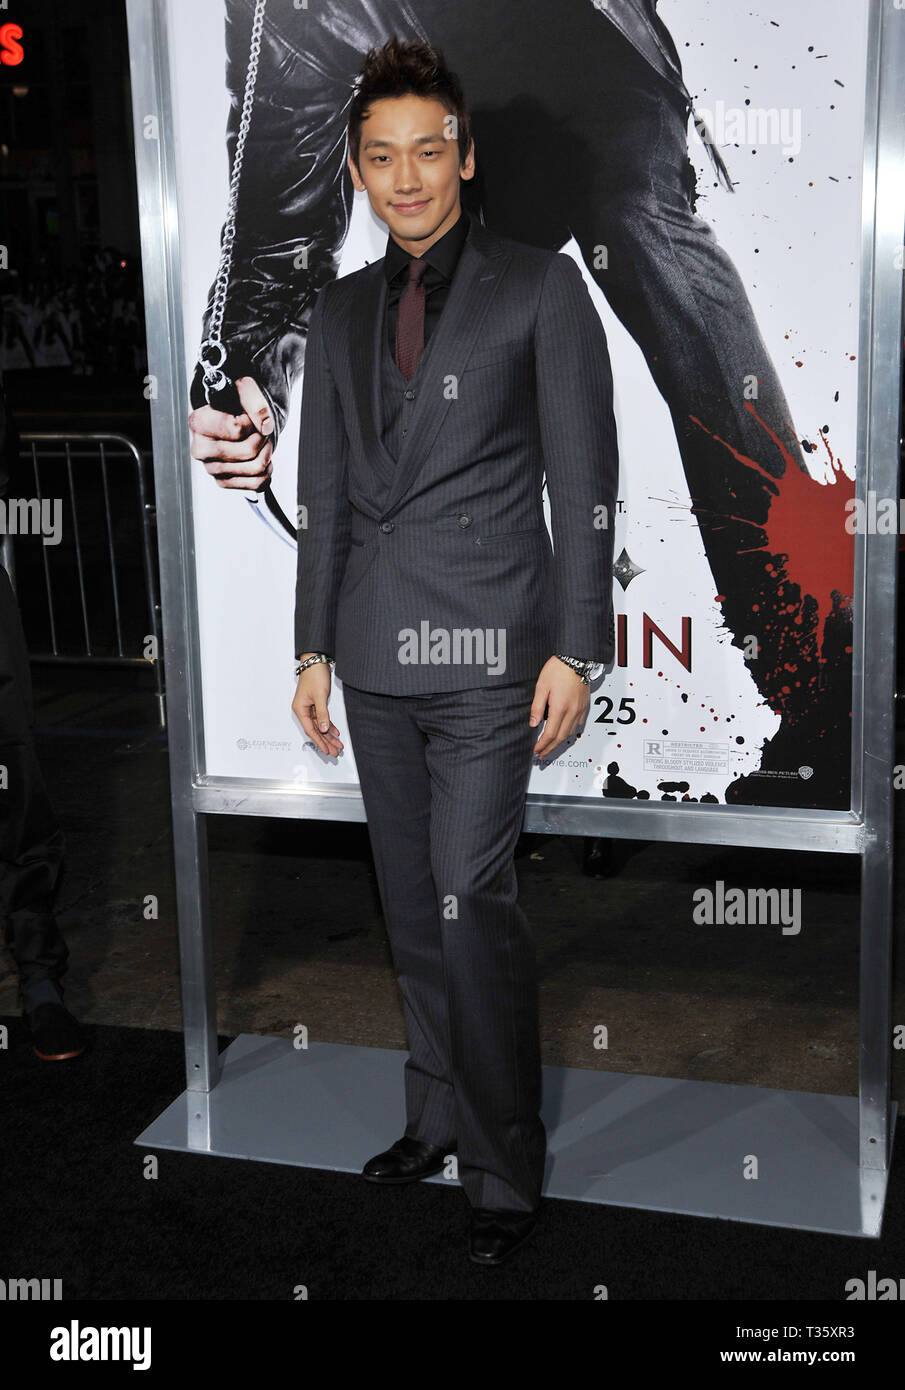 Rain Raizo The Premiere of 'Ninja Assassin' held at Grauman's Chinese  Theatre Los Angeles, California, USA - 19.11.09 : .com Stock Photo - Alamy